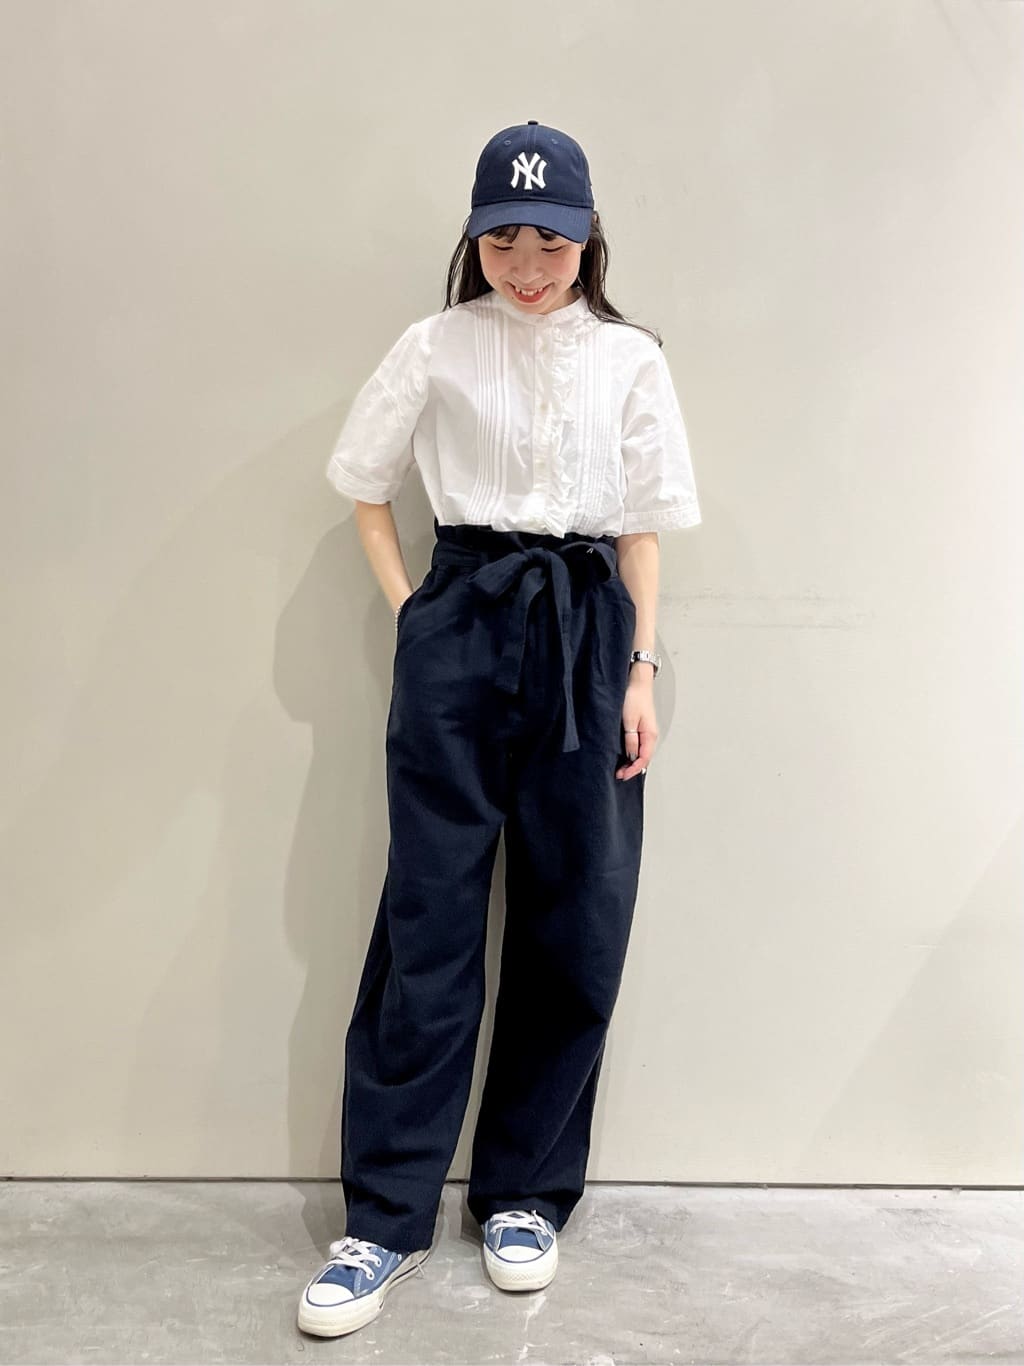 Dot and Stripes CHILD WOMAN CHILD WOMAN , PAR ICI 新宿ミロード 身長：154cm 2023.05.16